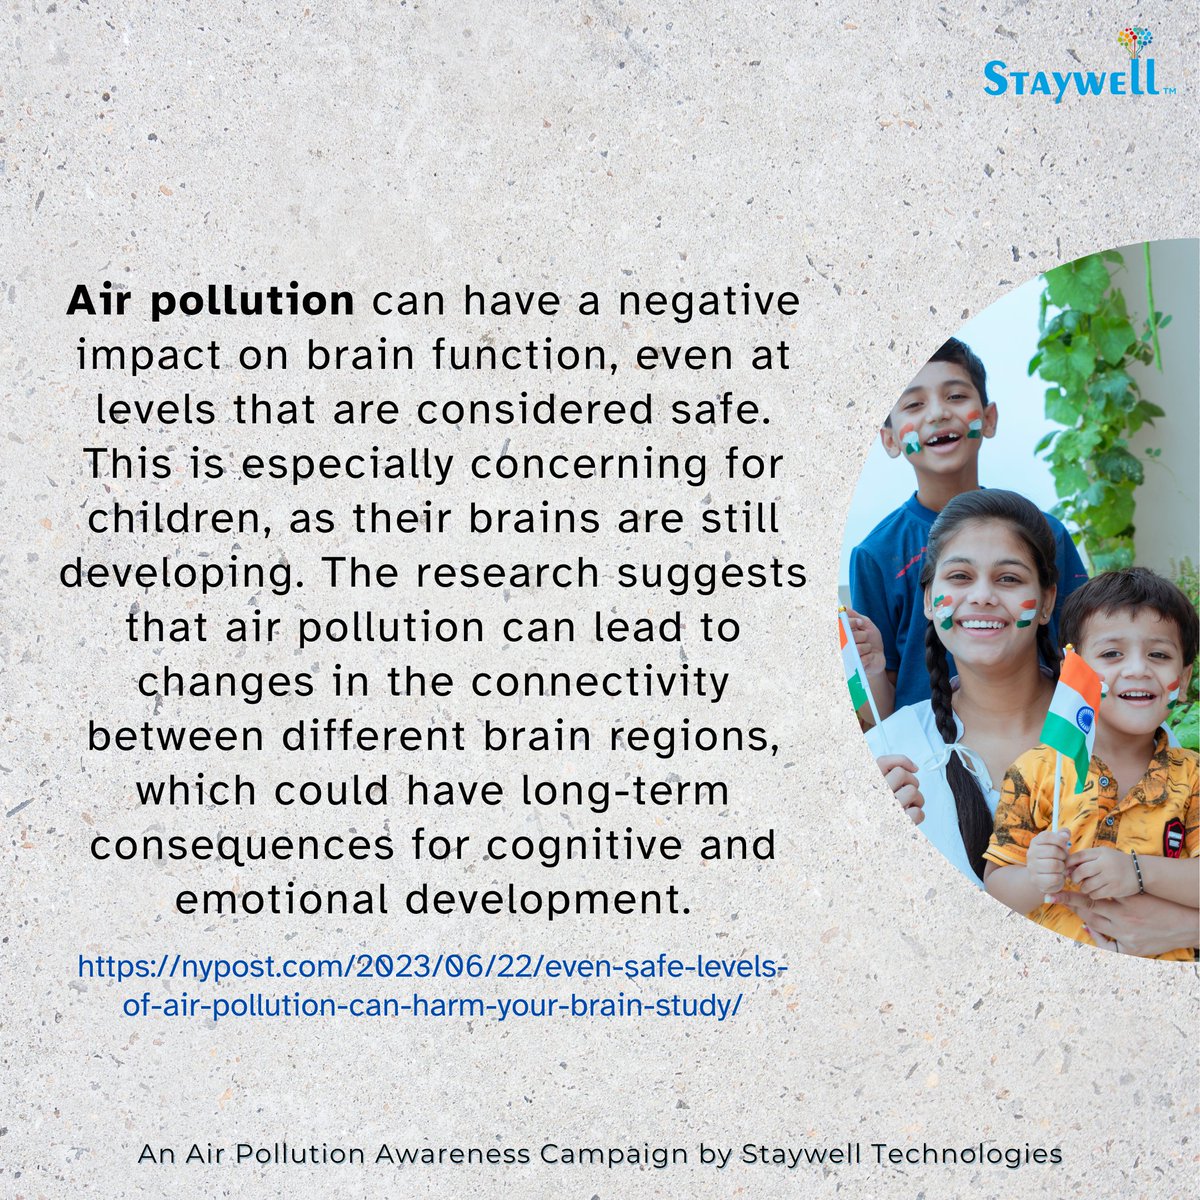 #airpollution
#airpollutionawareness
#brainhealth
#childdevelopment
#cognitivefunction
#emotionaldevelopment
#staywelltechnologies
#pollutionawareness
#cleanair
#protectourchildren